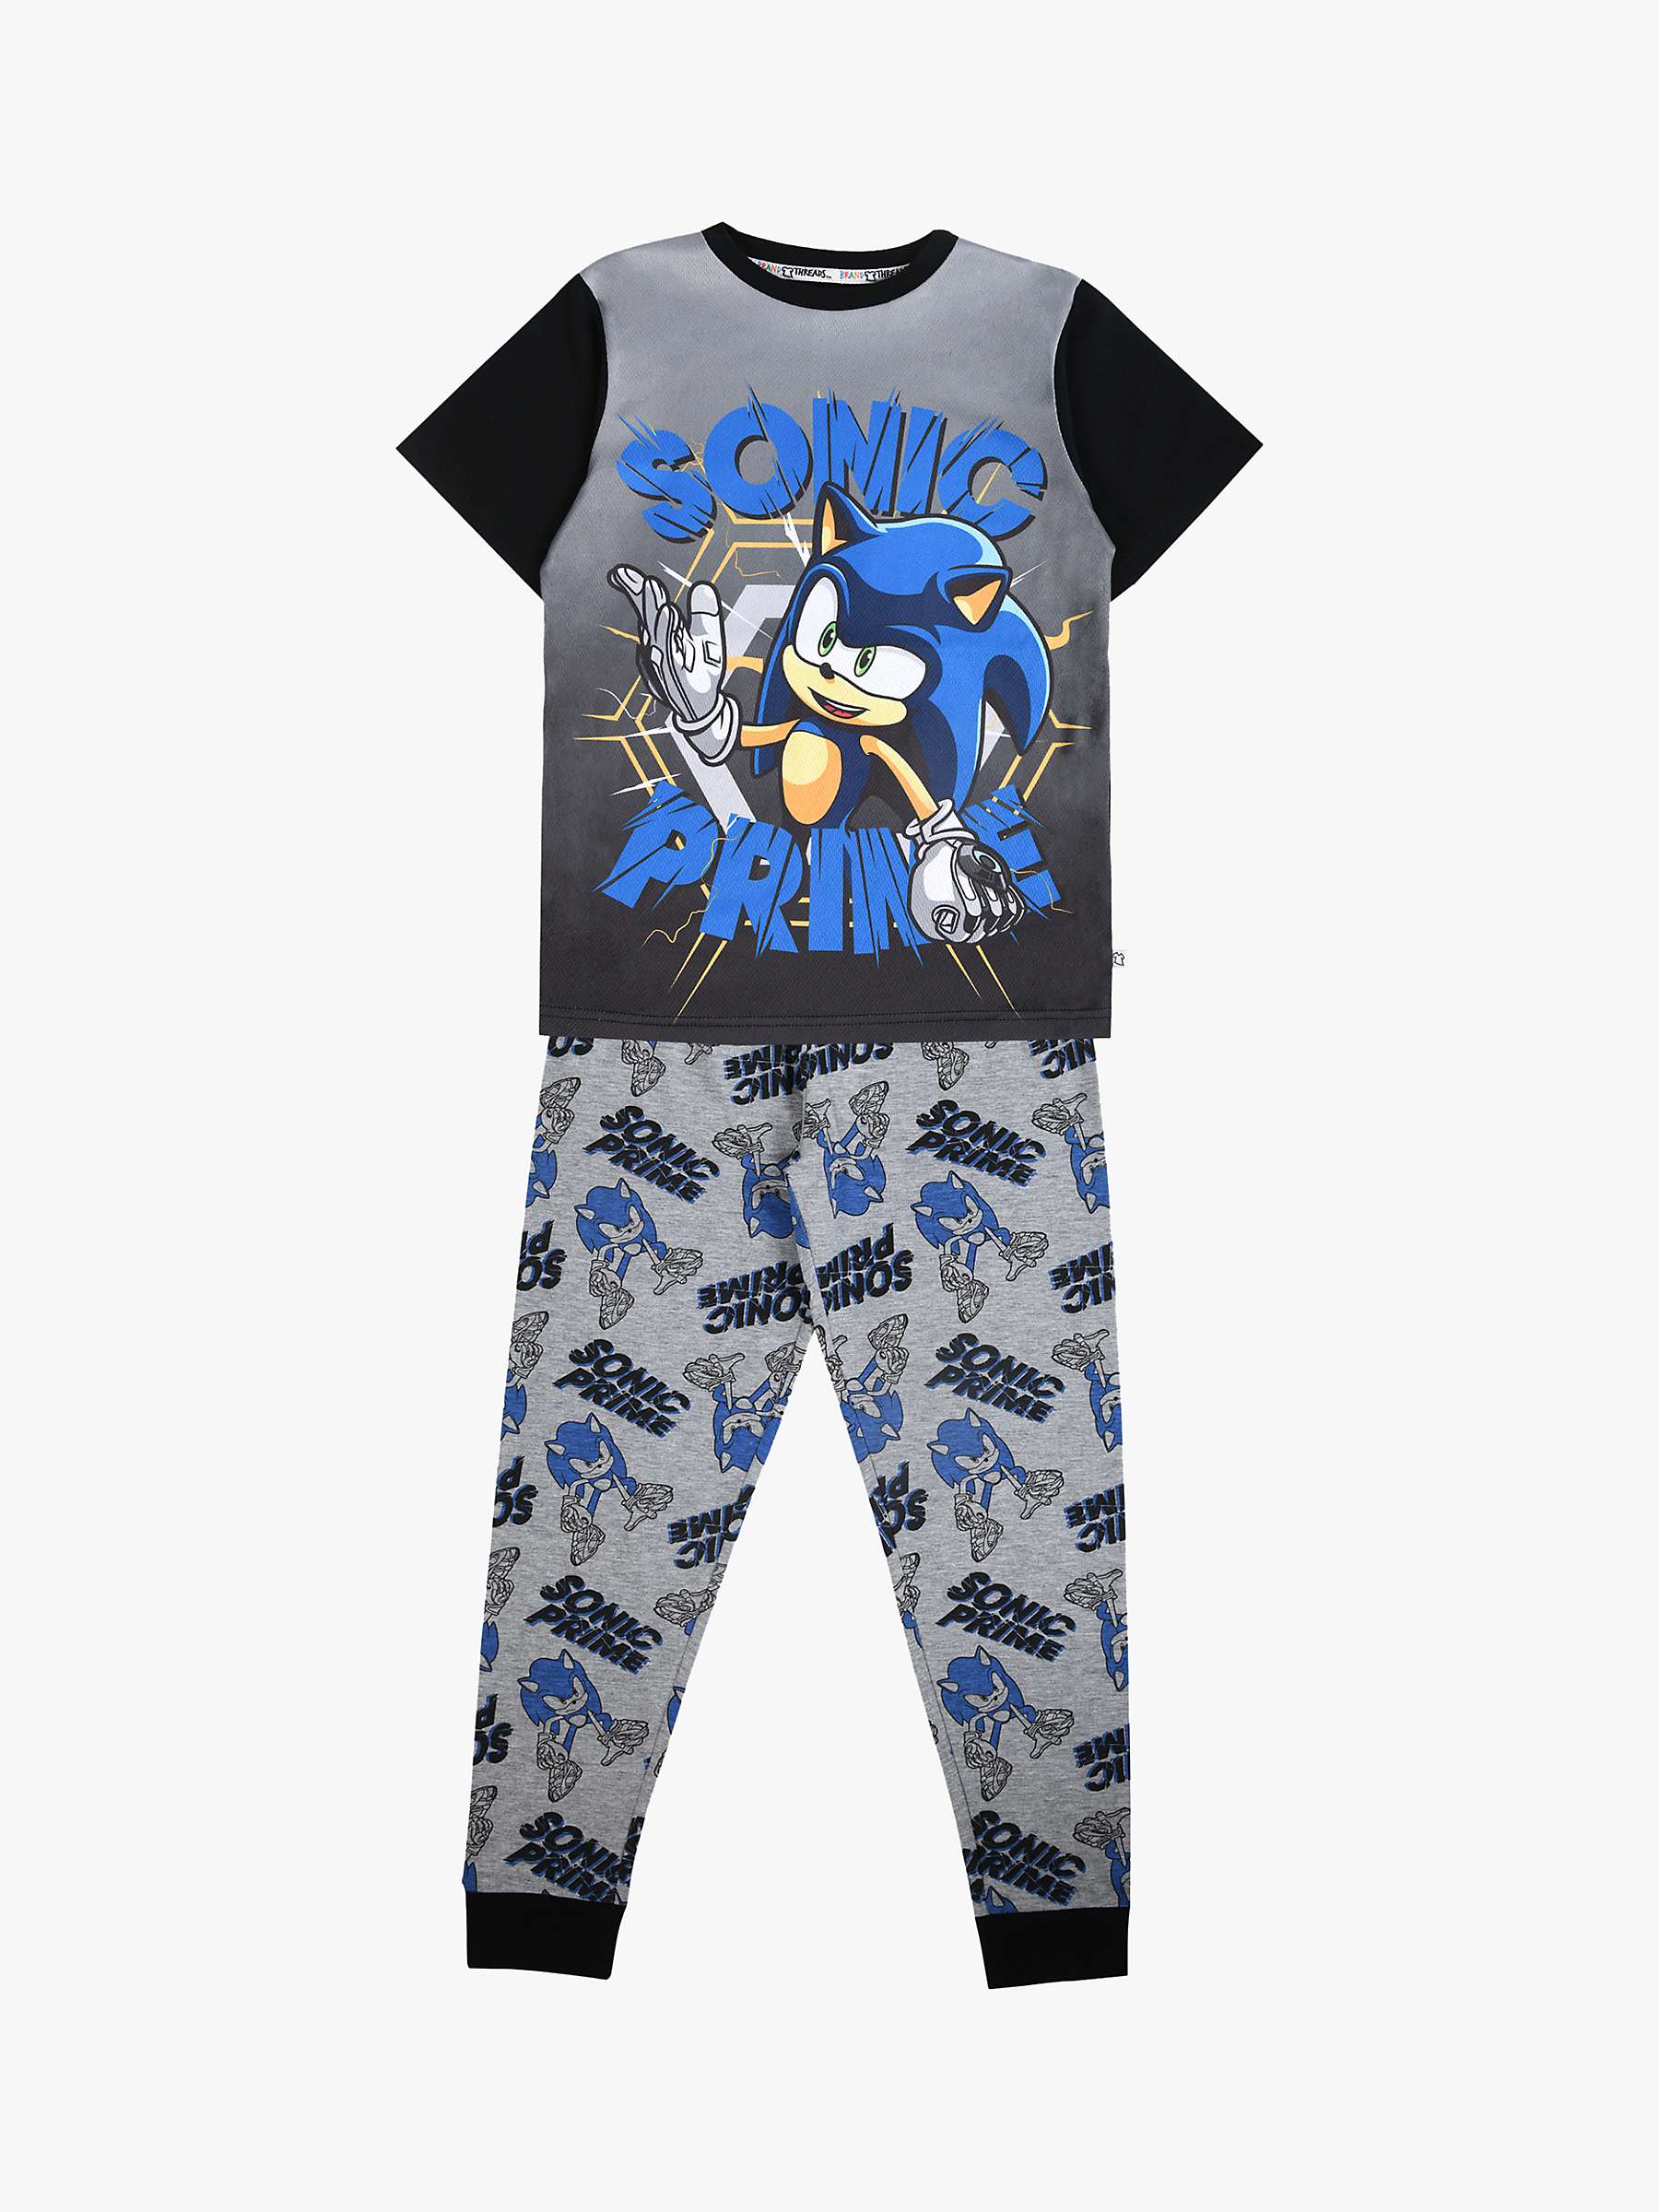 Buy Brand Threads Kids' Sonic Pyjama Set, Grey/Blue Online at johnlewis.com